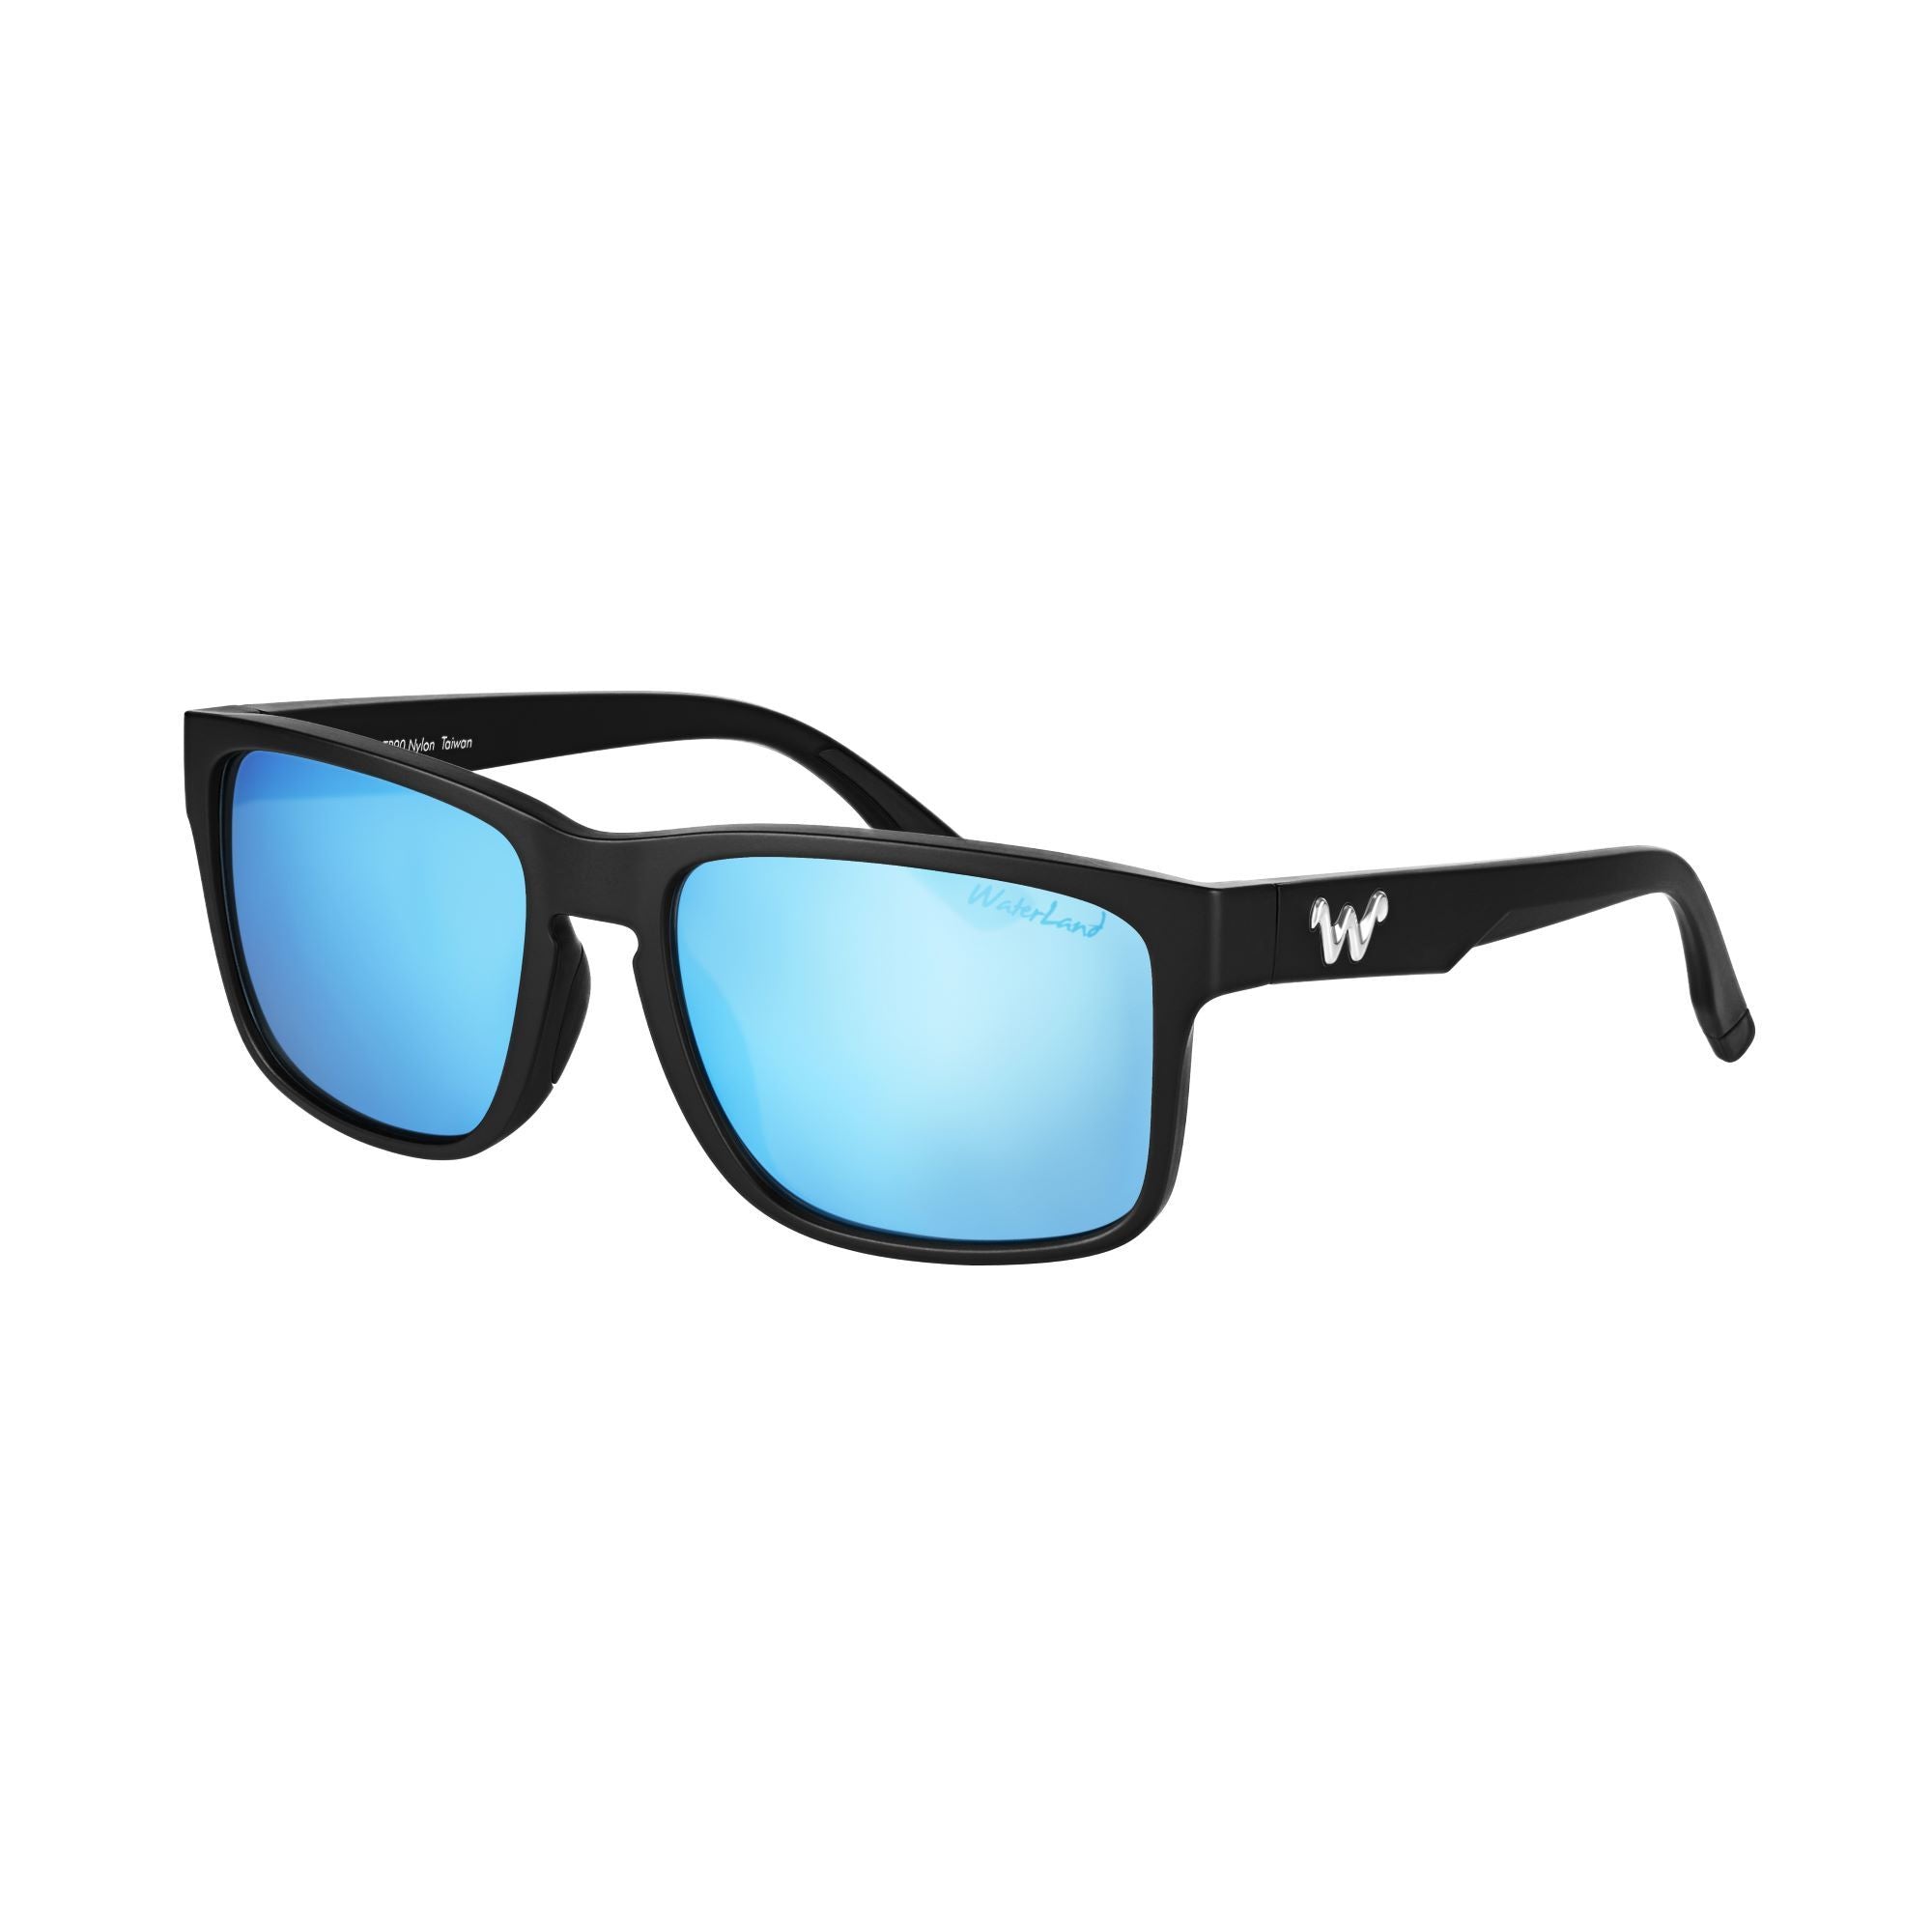 6th Sense Fishing WaterLand Sunglasses WaterLand Co. - Sobro